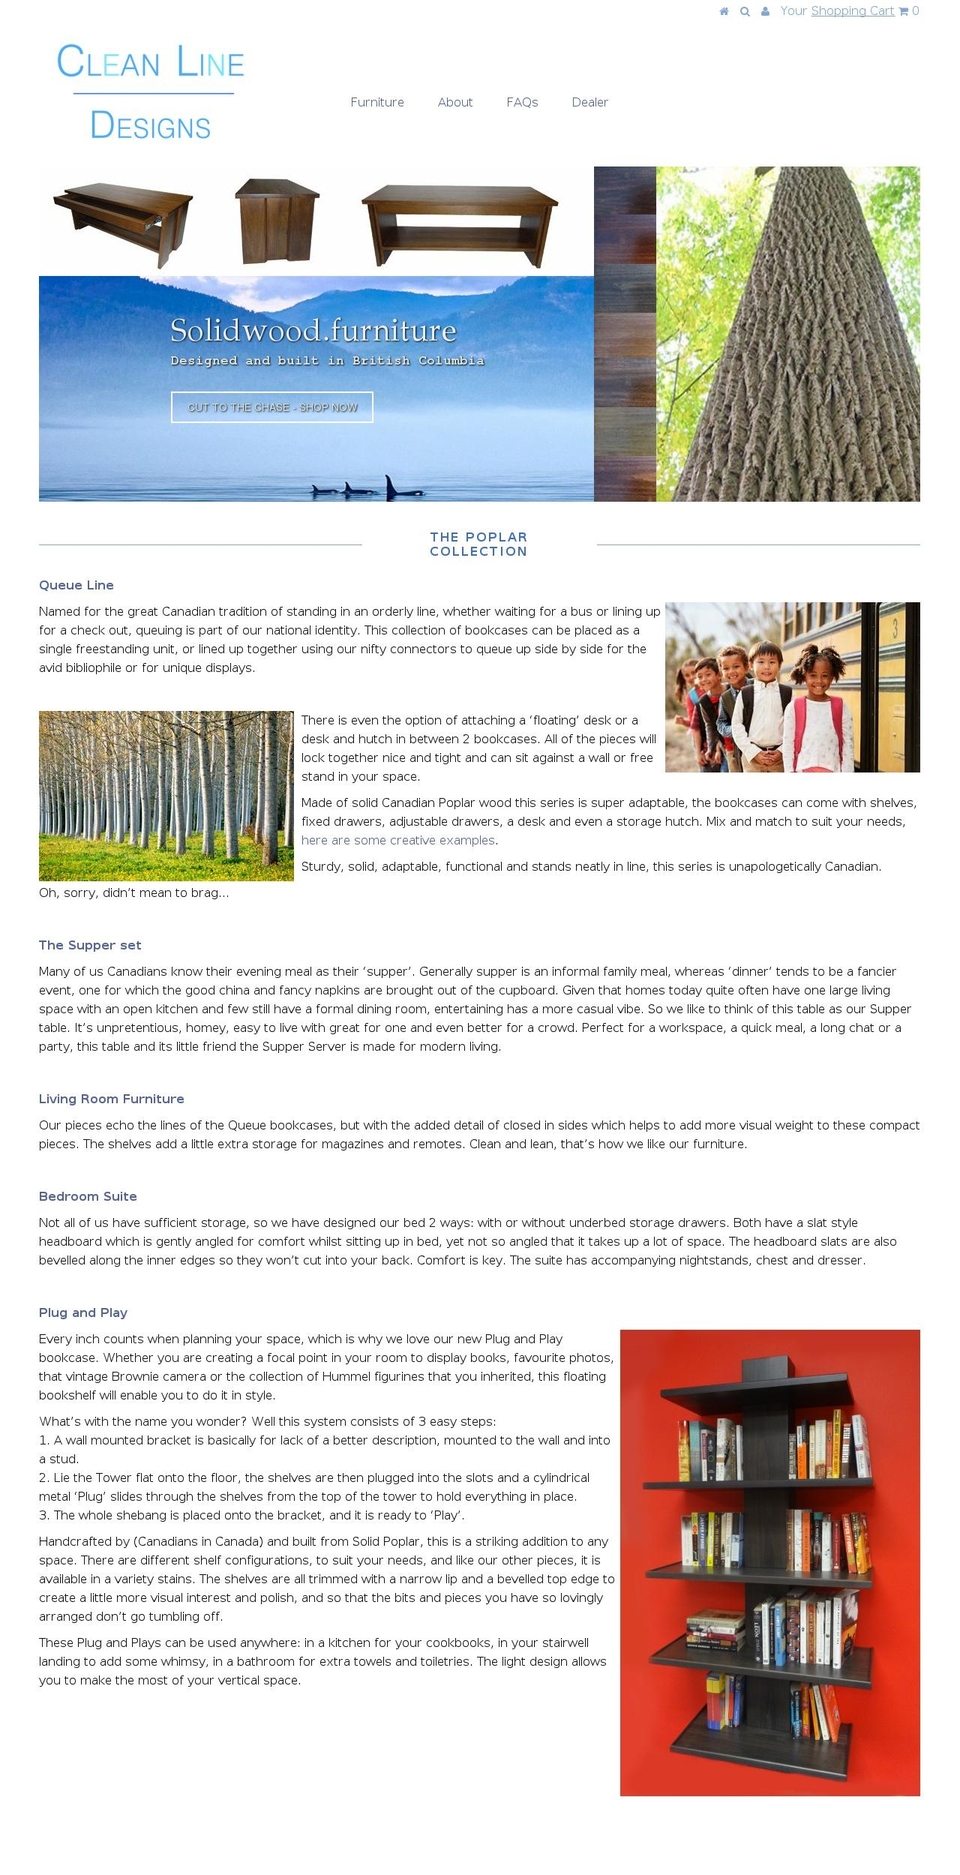 solidwood.furniture shopify website screenshot